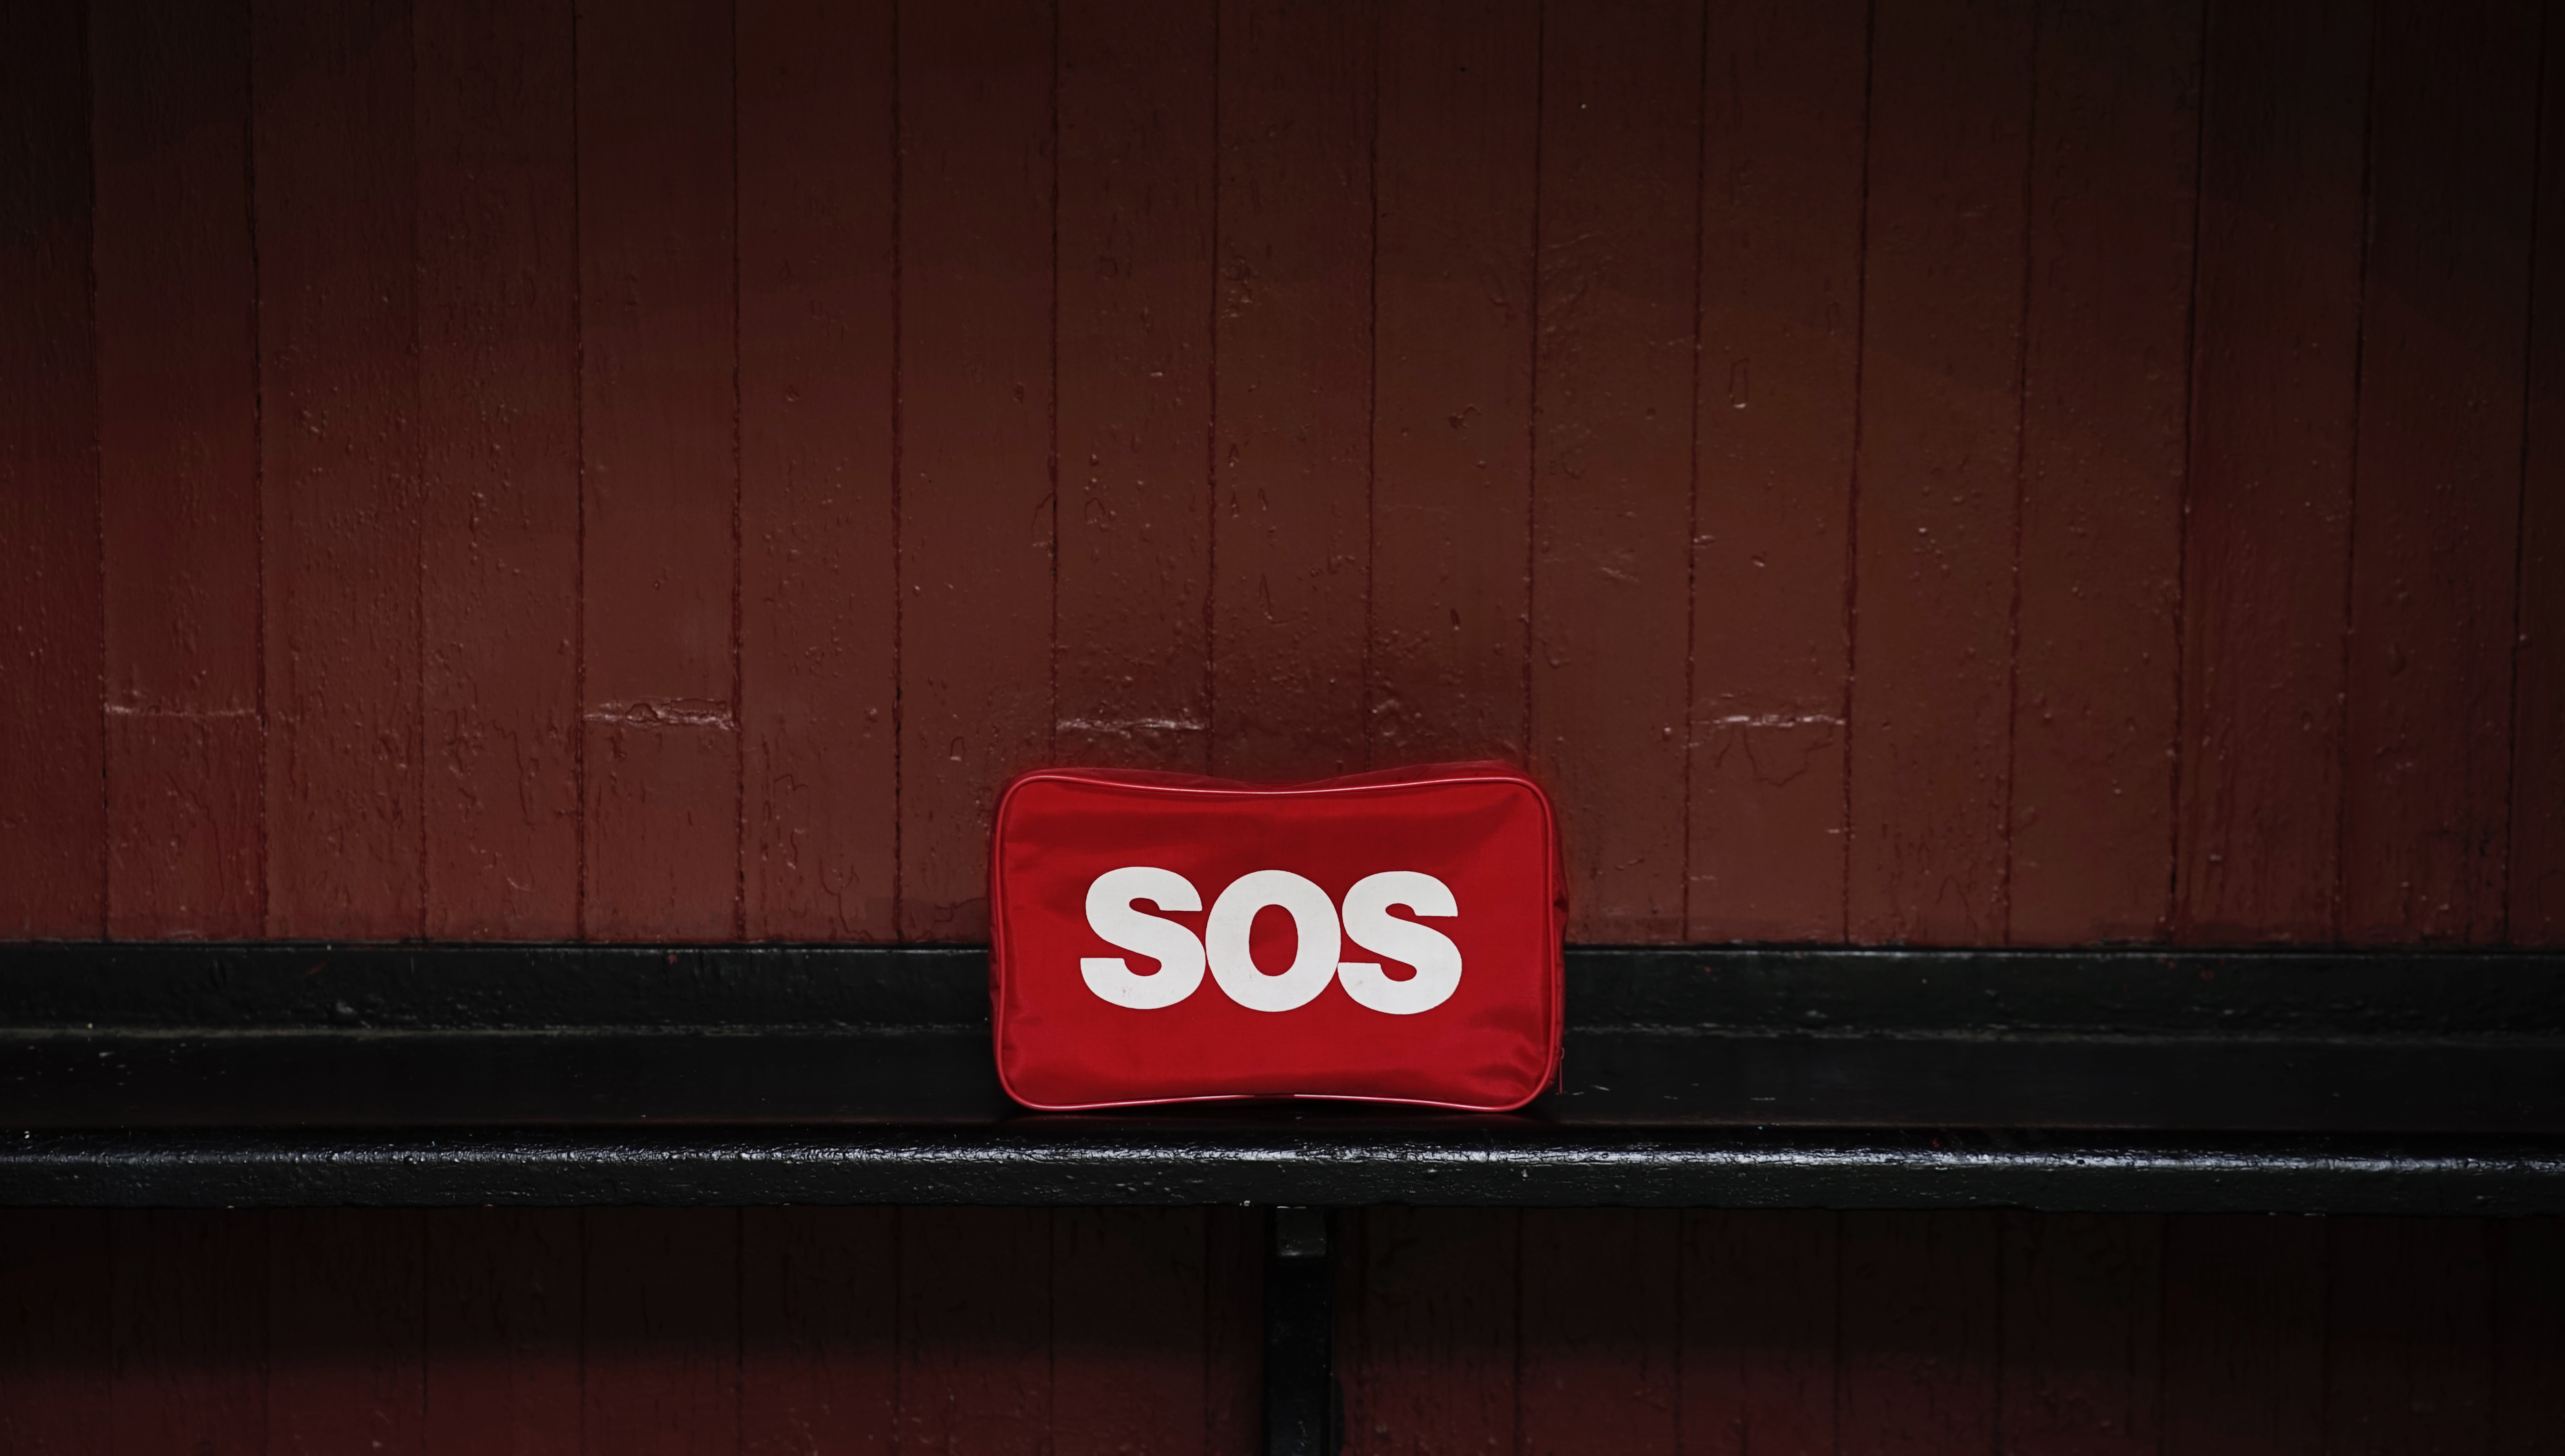 SOS sign